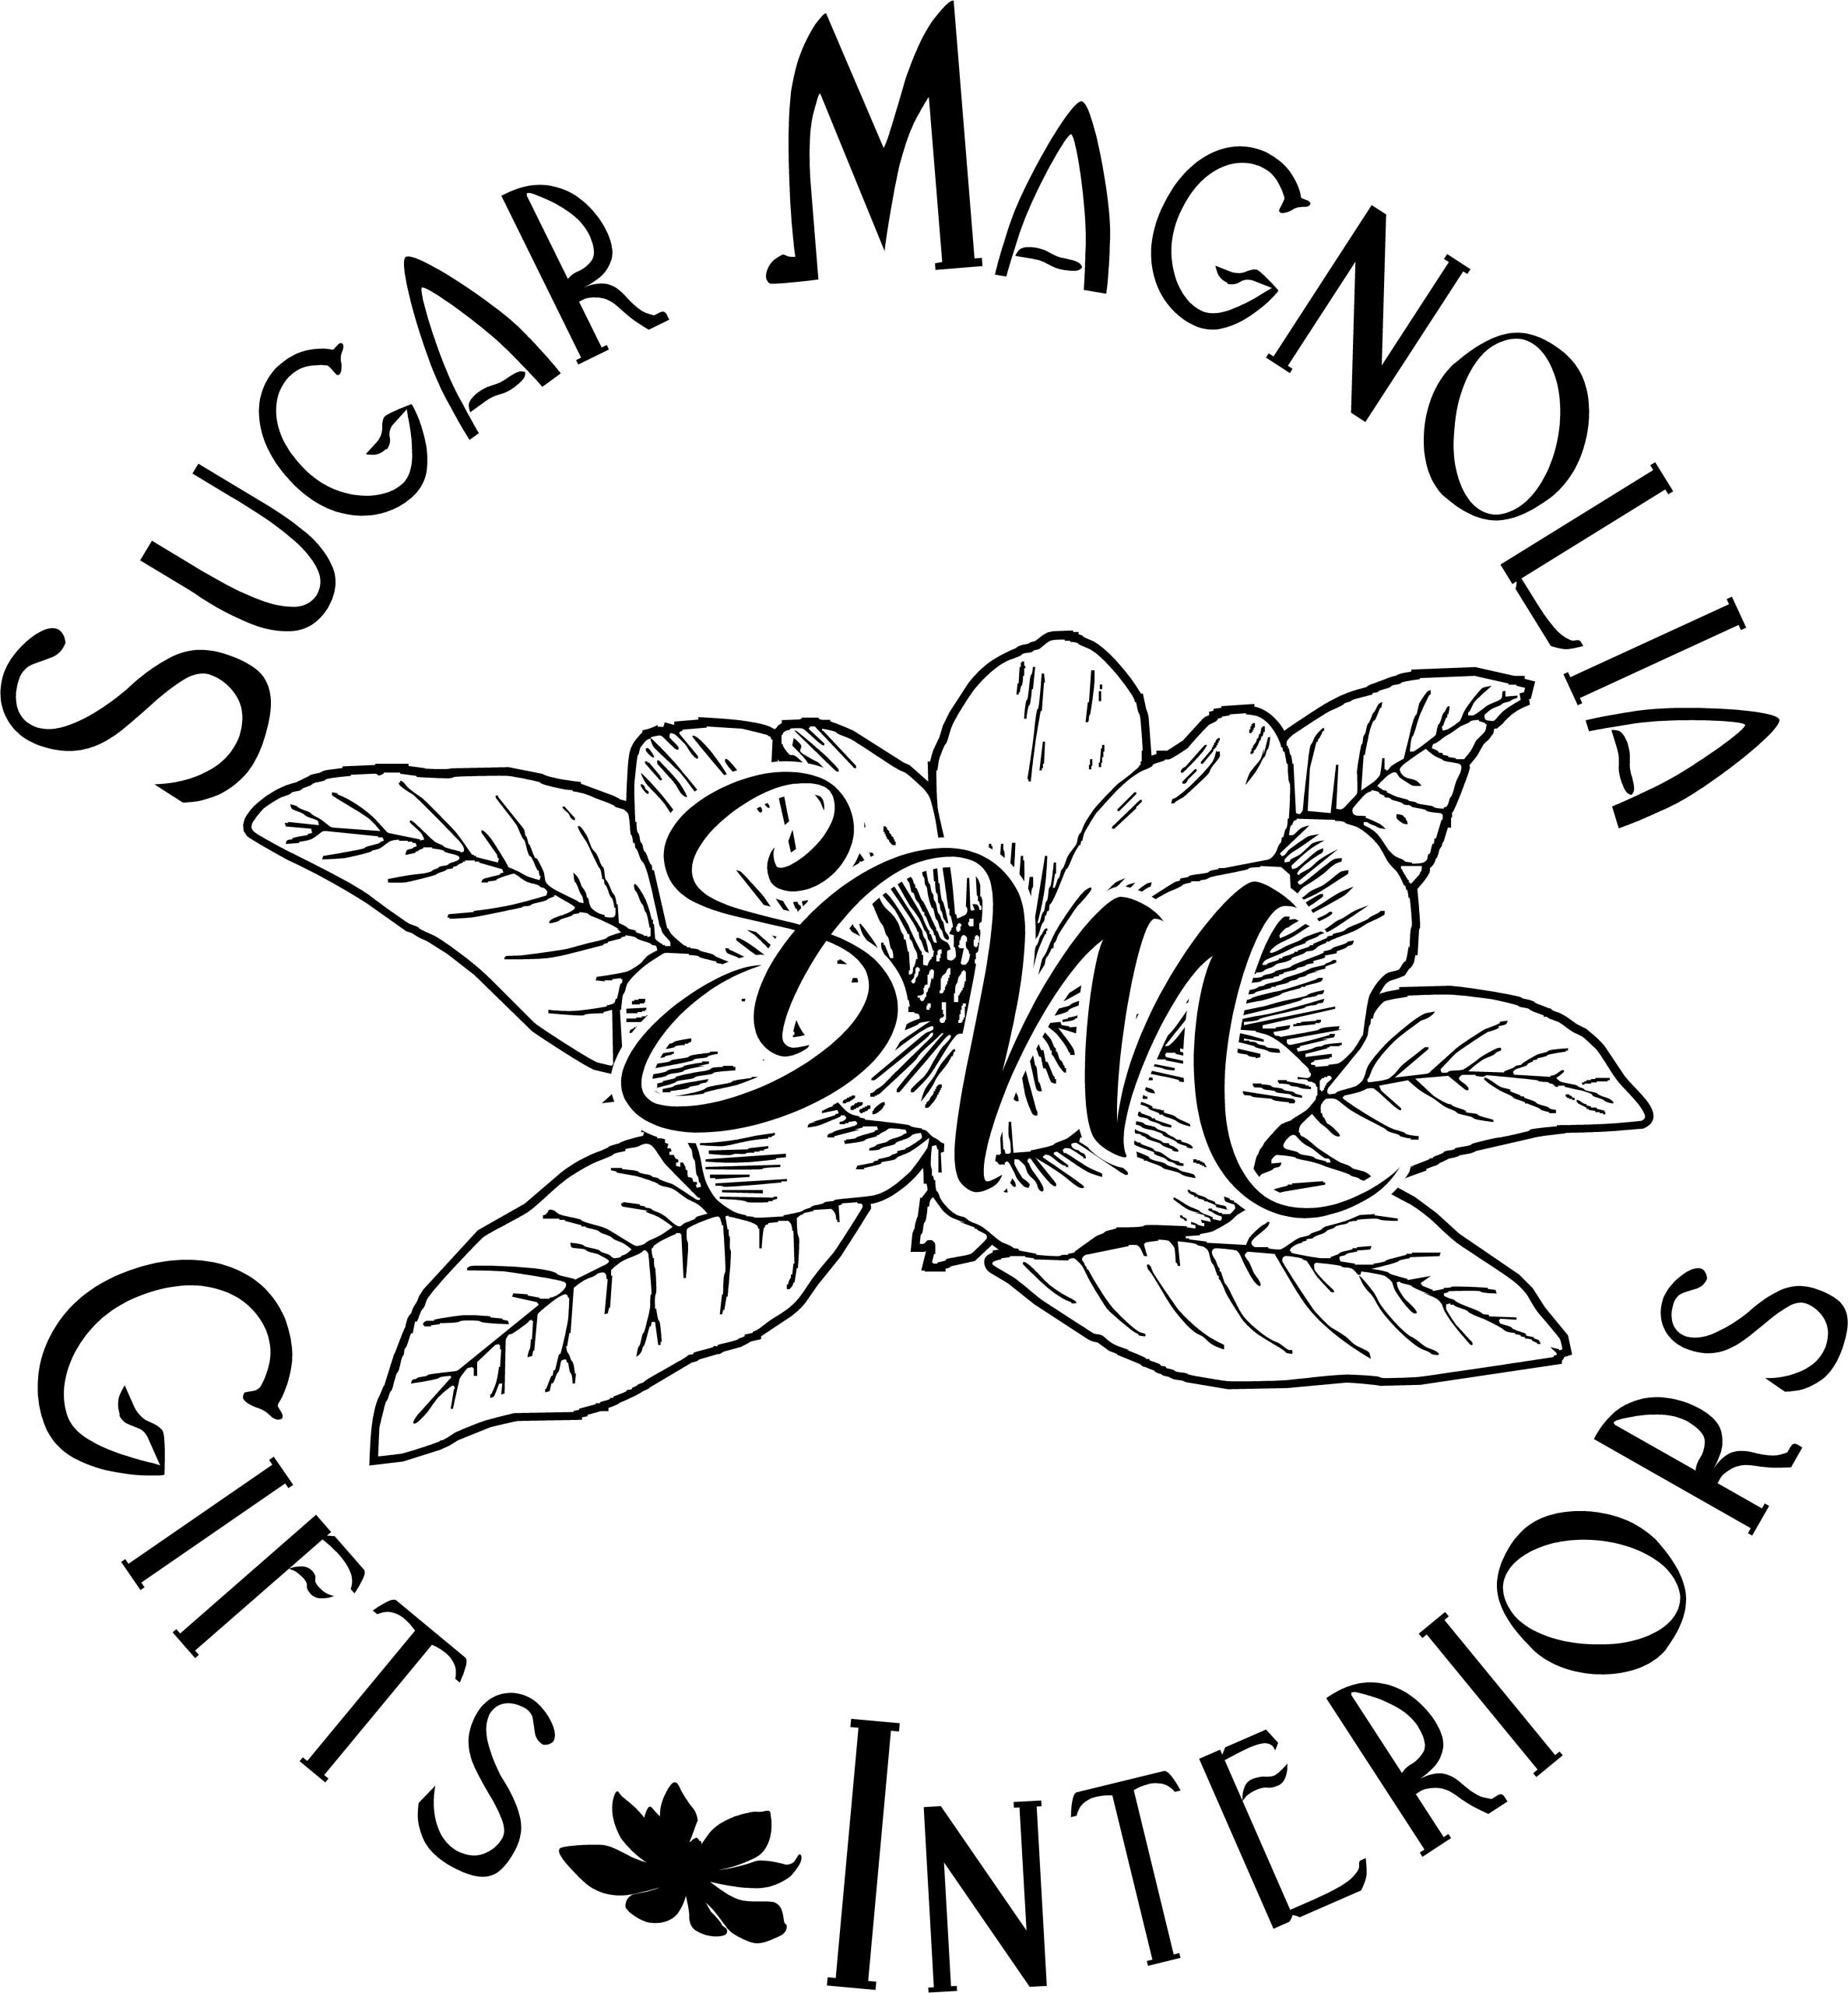 Sugar Magnolia Gifts & Interiors